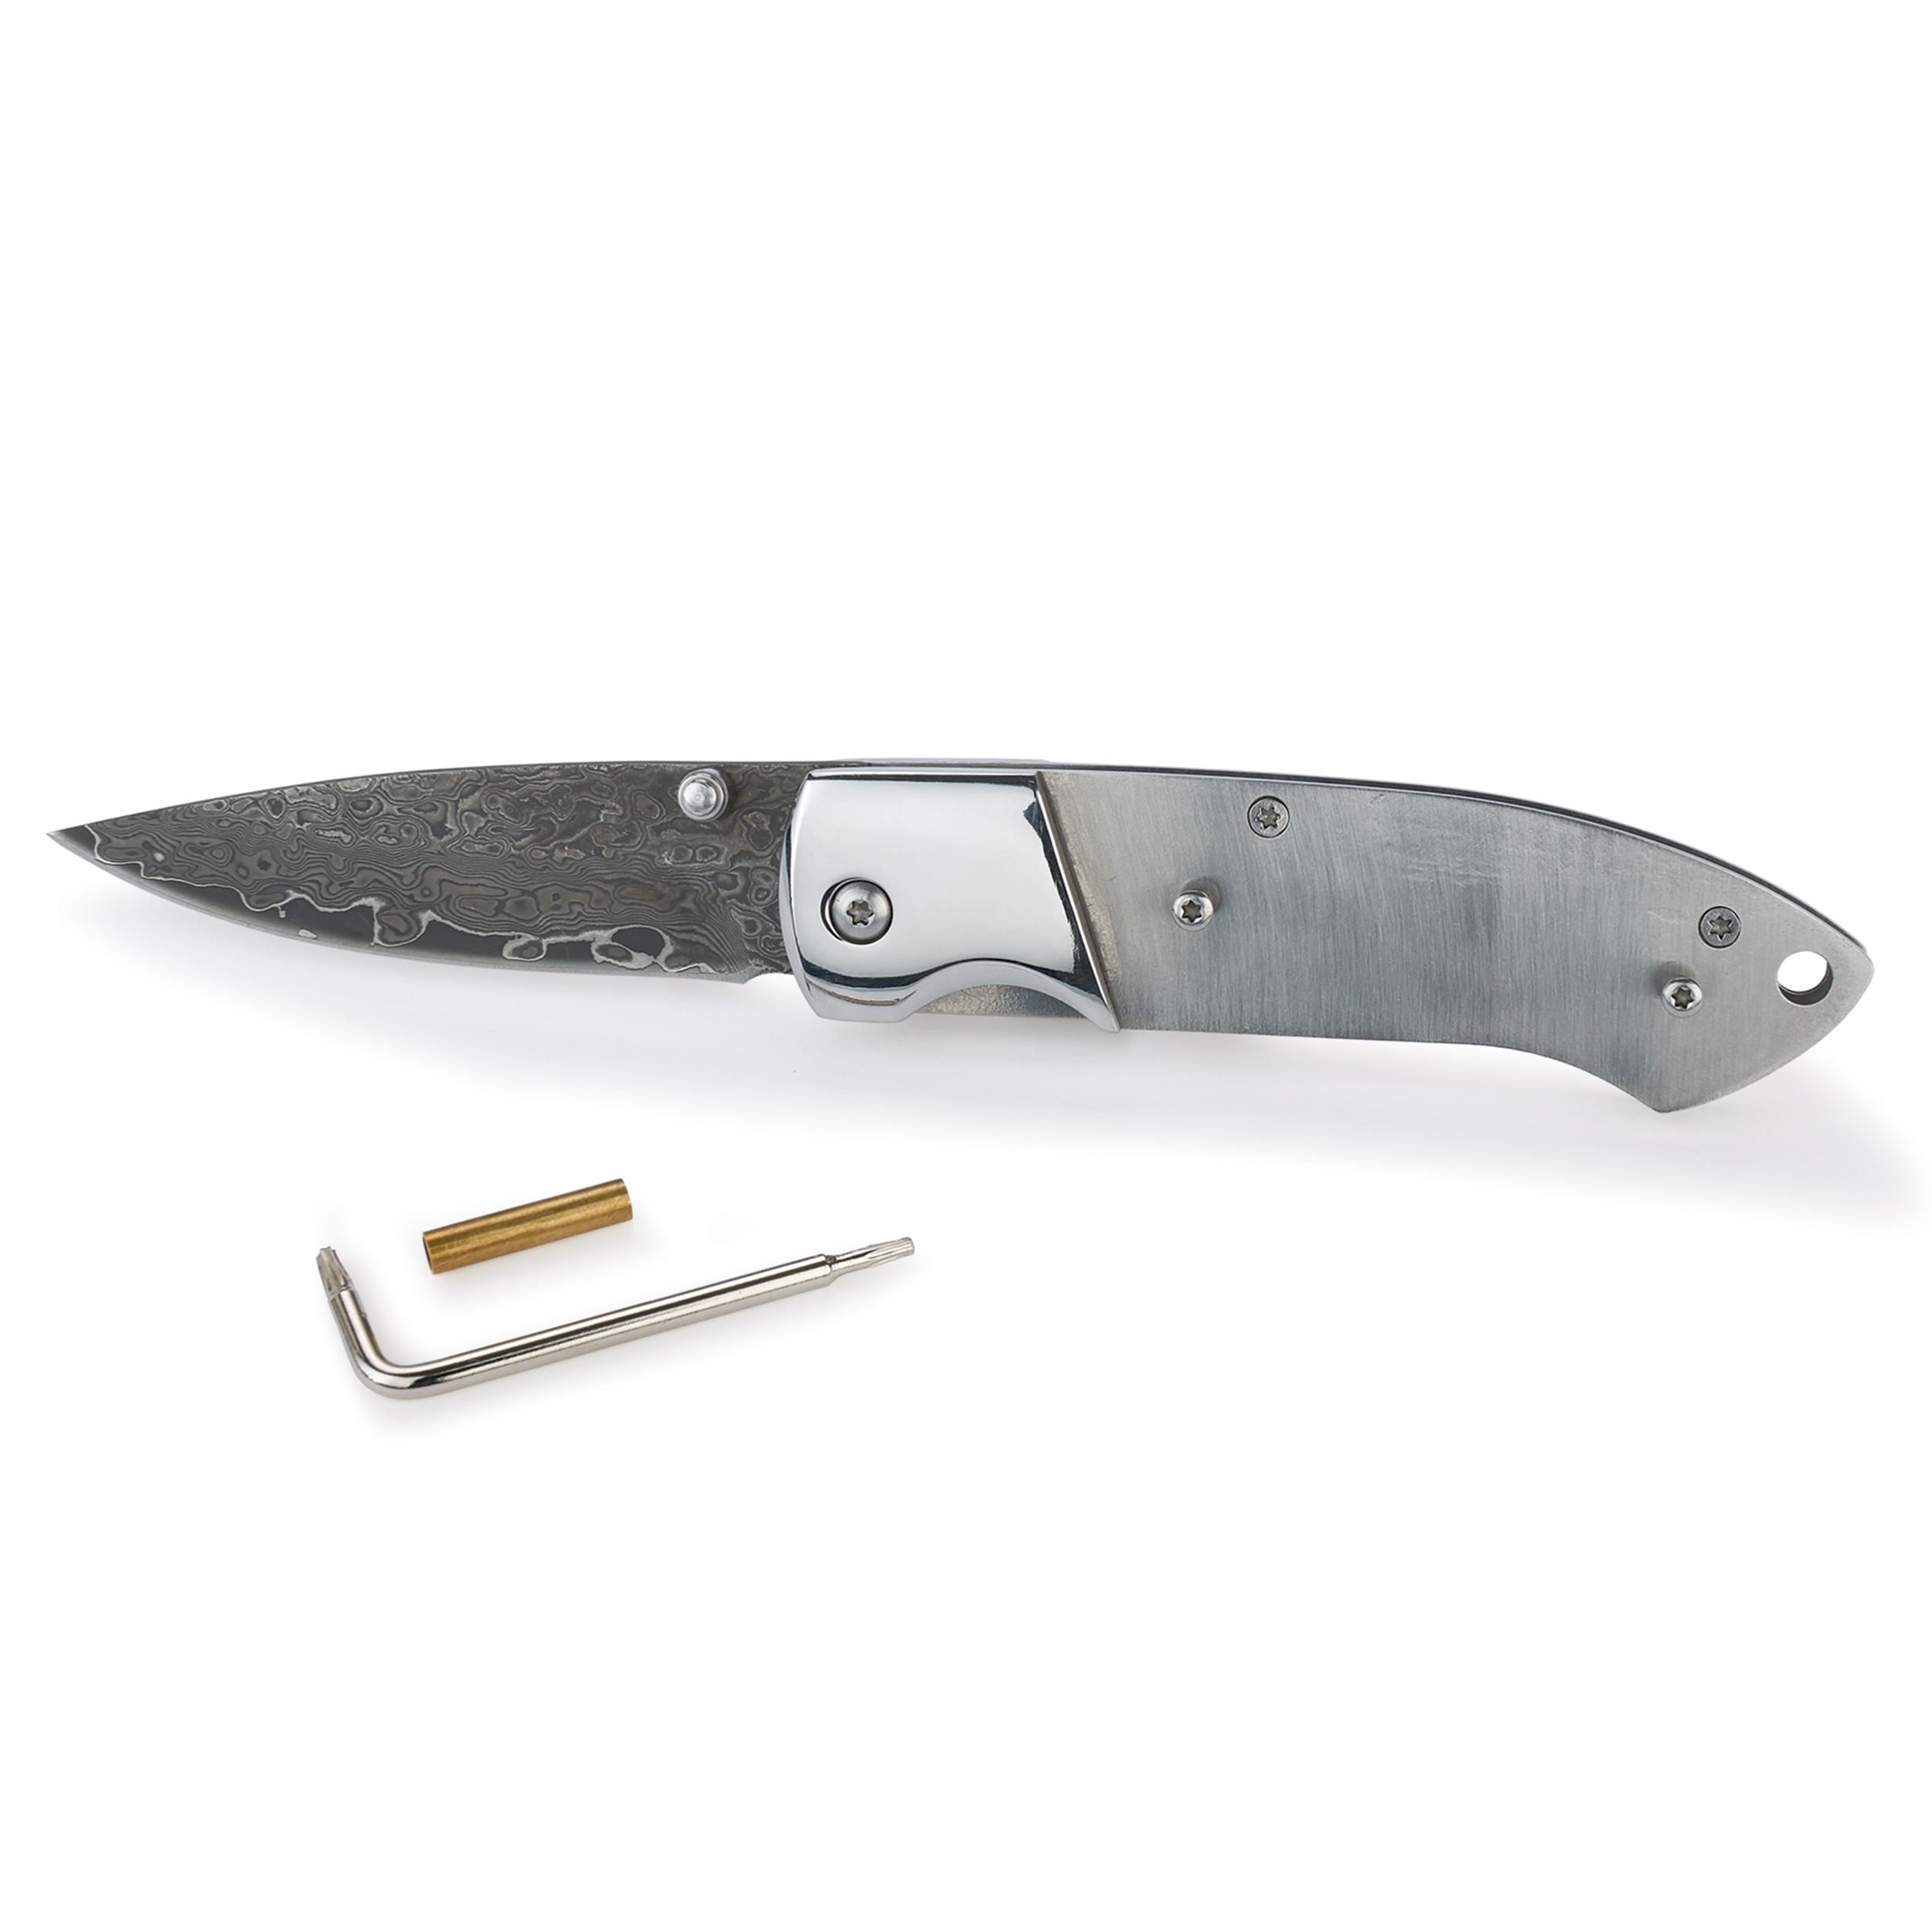 Sarge Brave 69 Layer Damascus Folder Knife Kit